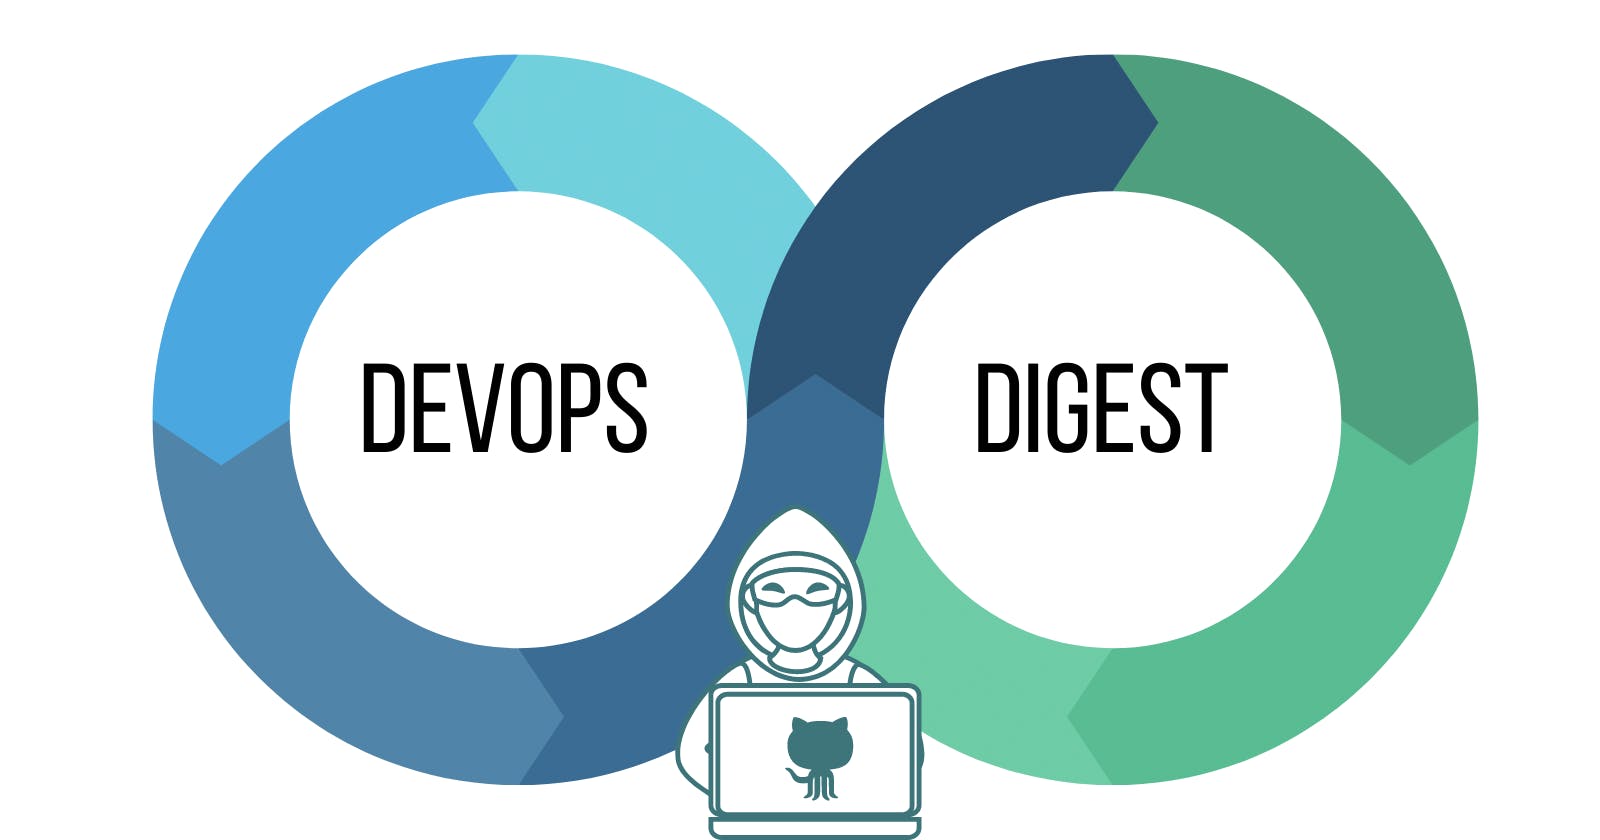 DevOps Digest - An Open Source Contribution